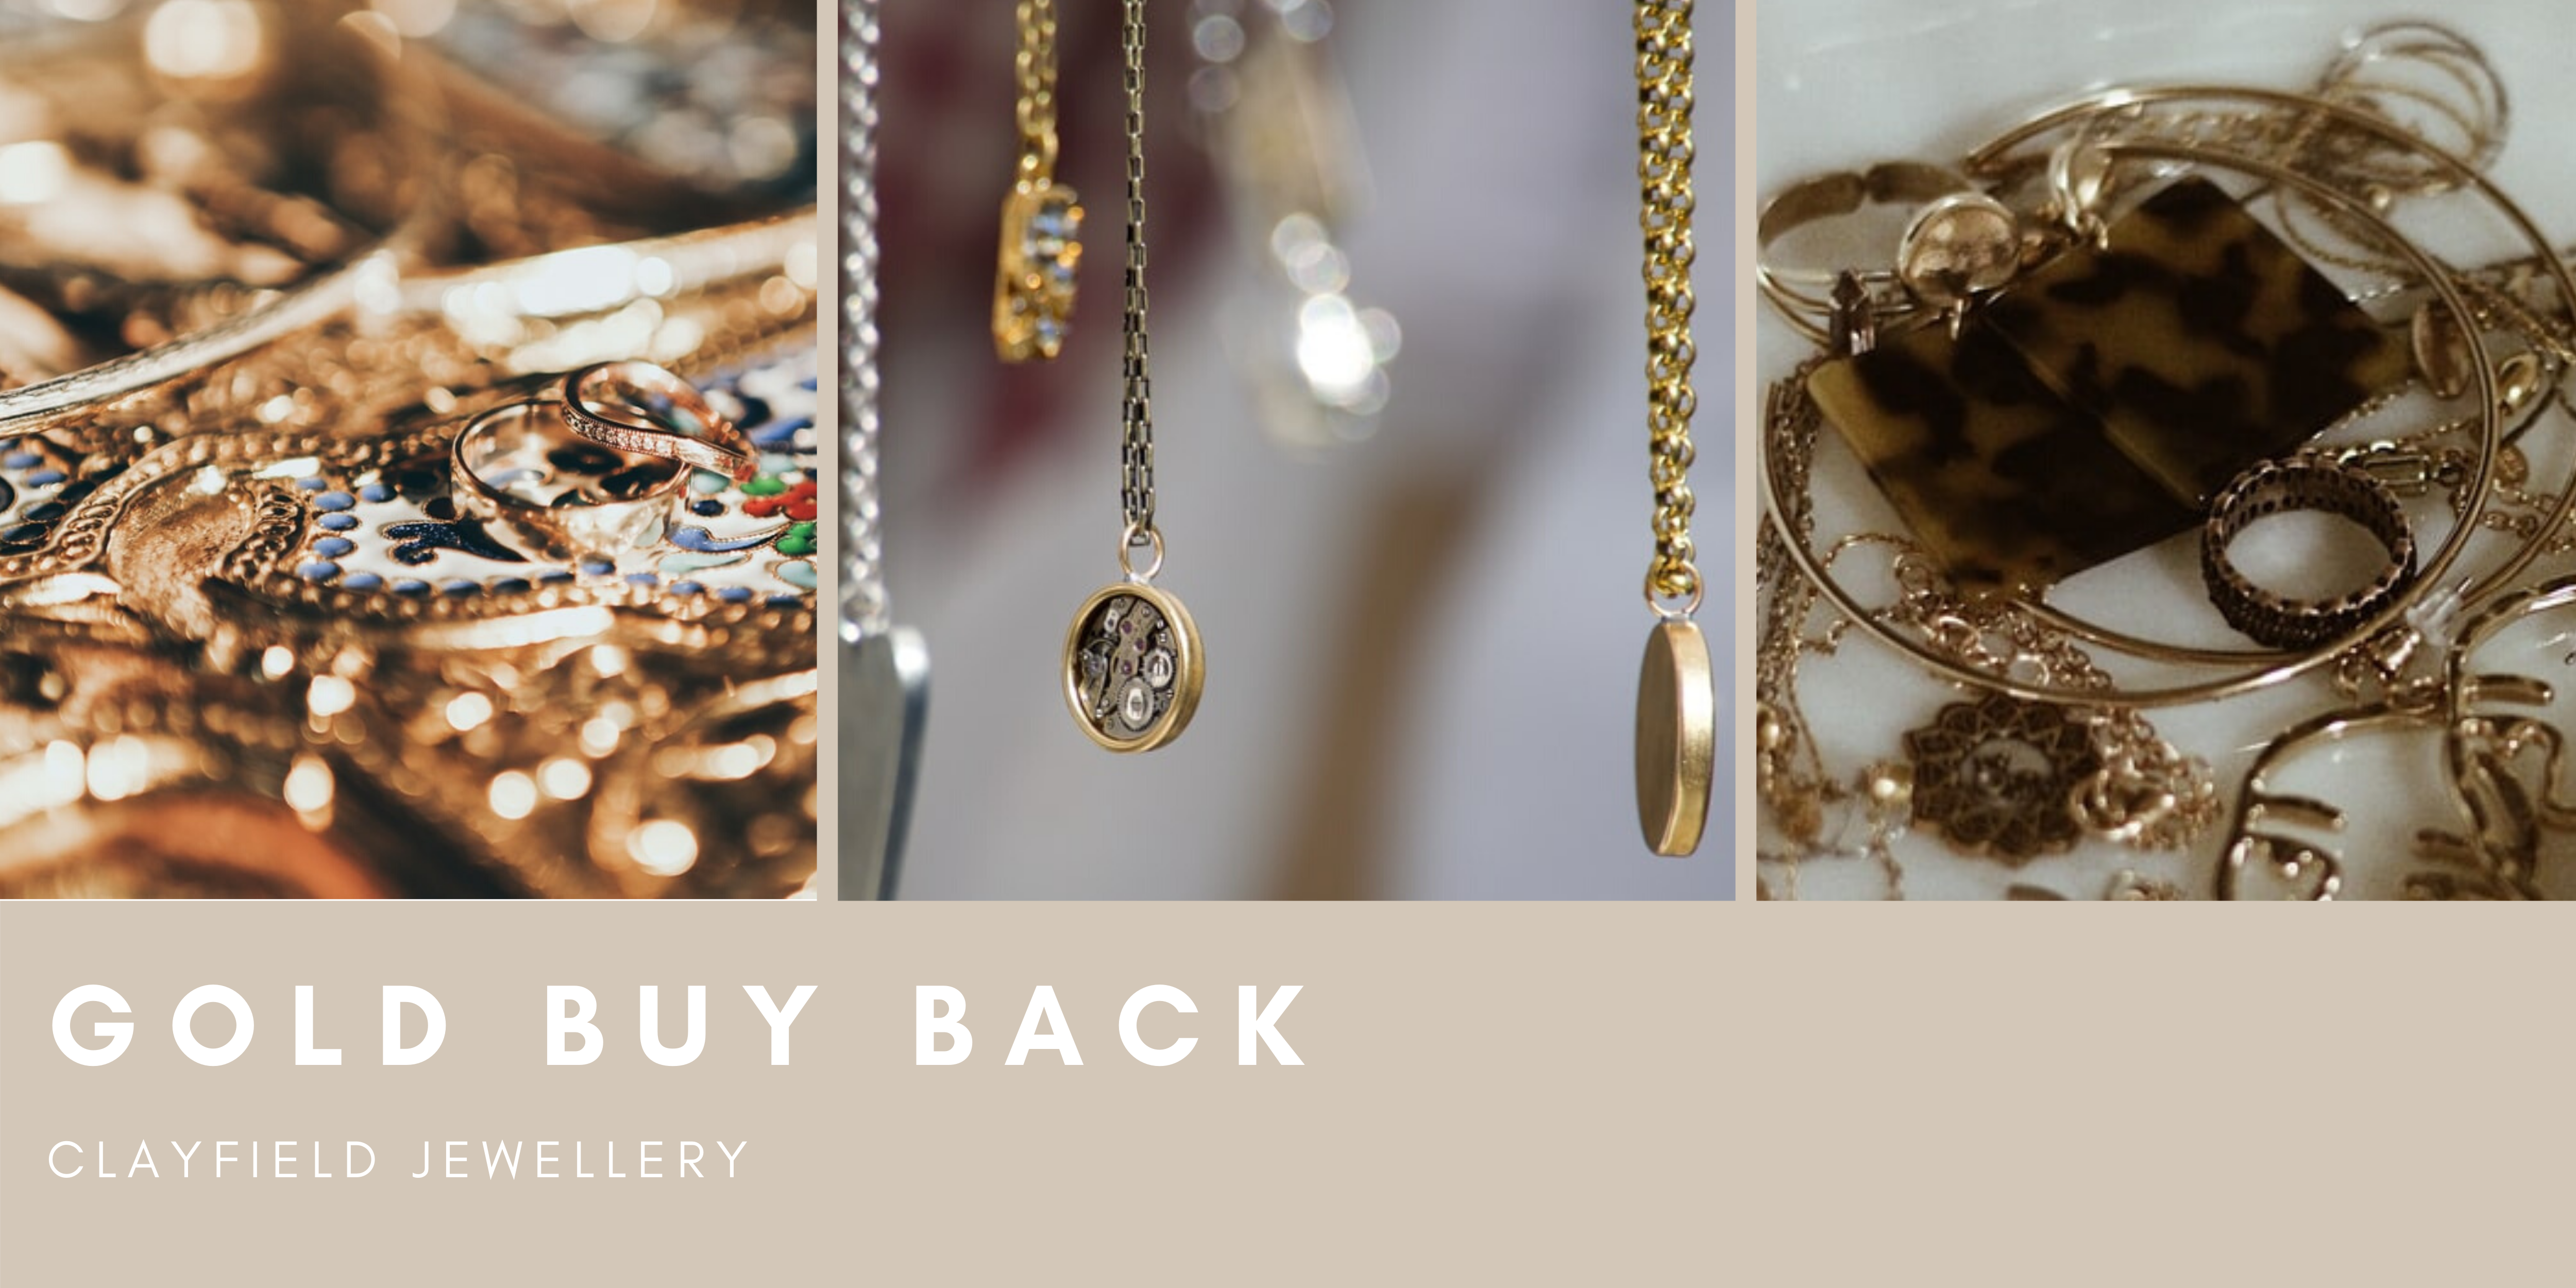 clayfield jewellery gold buy back